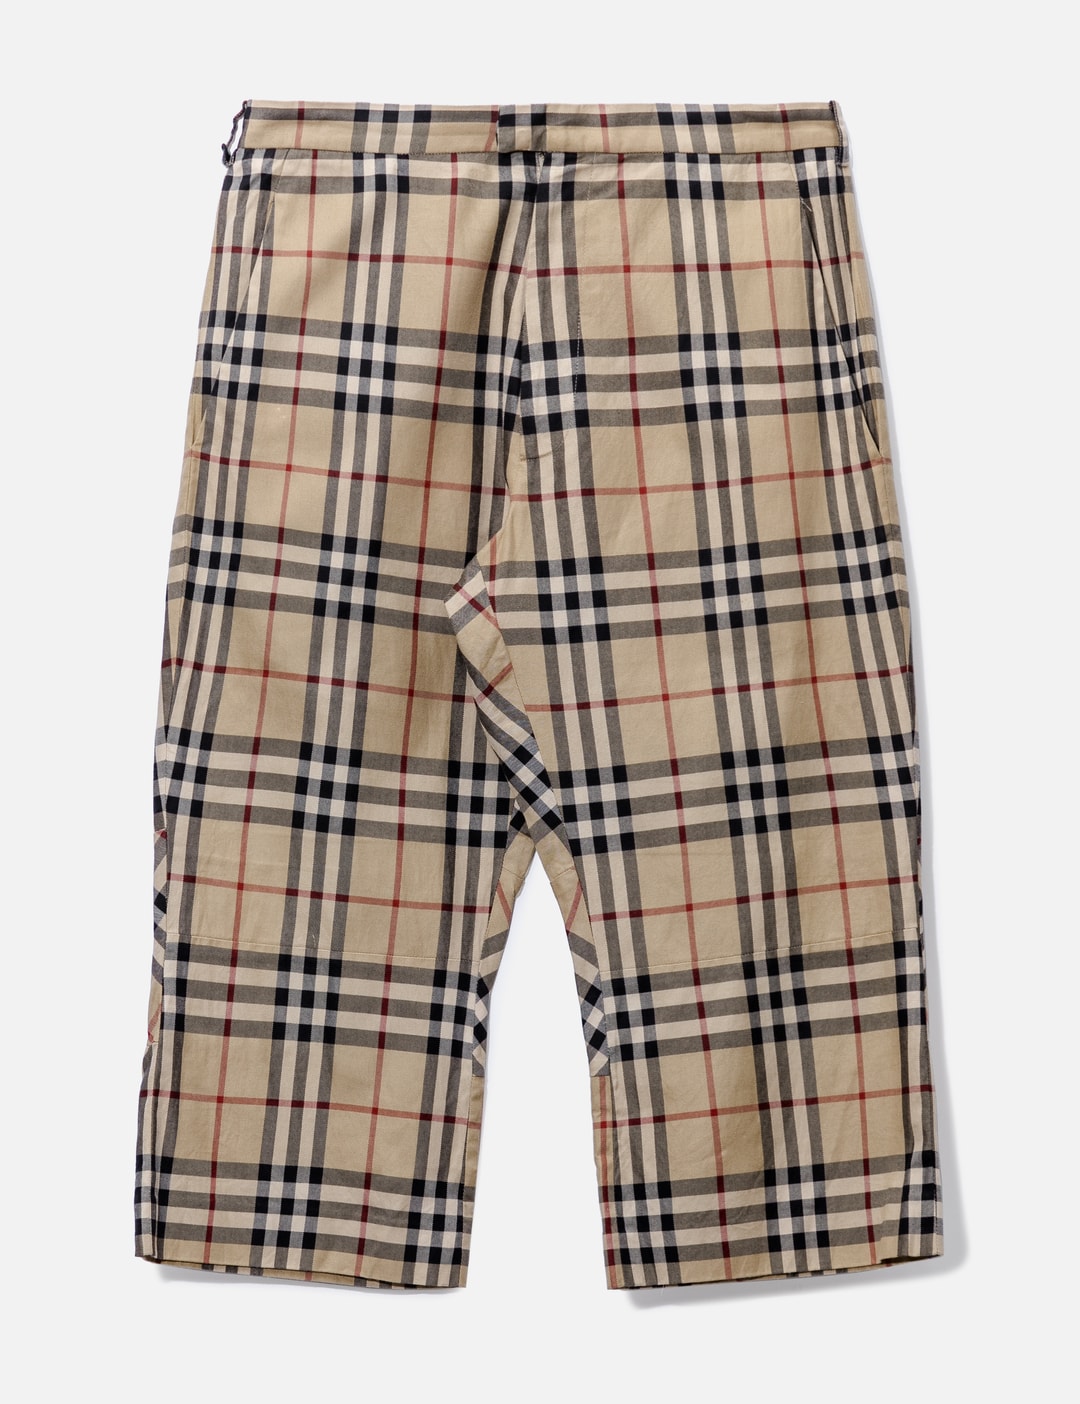 Burberry AUDREY Check JOGGING Shorts